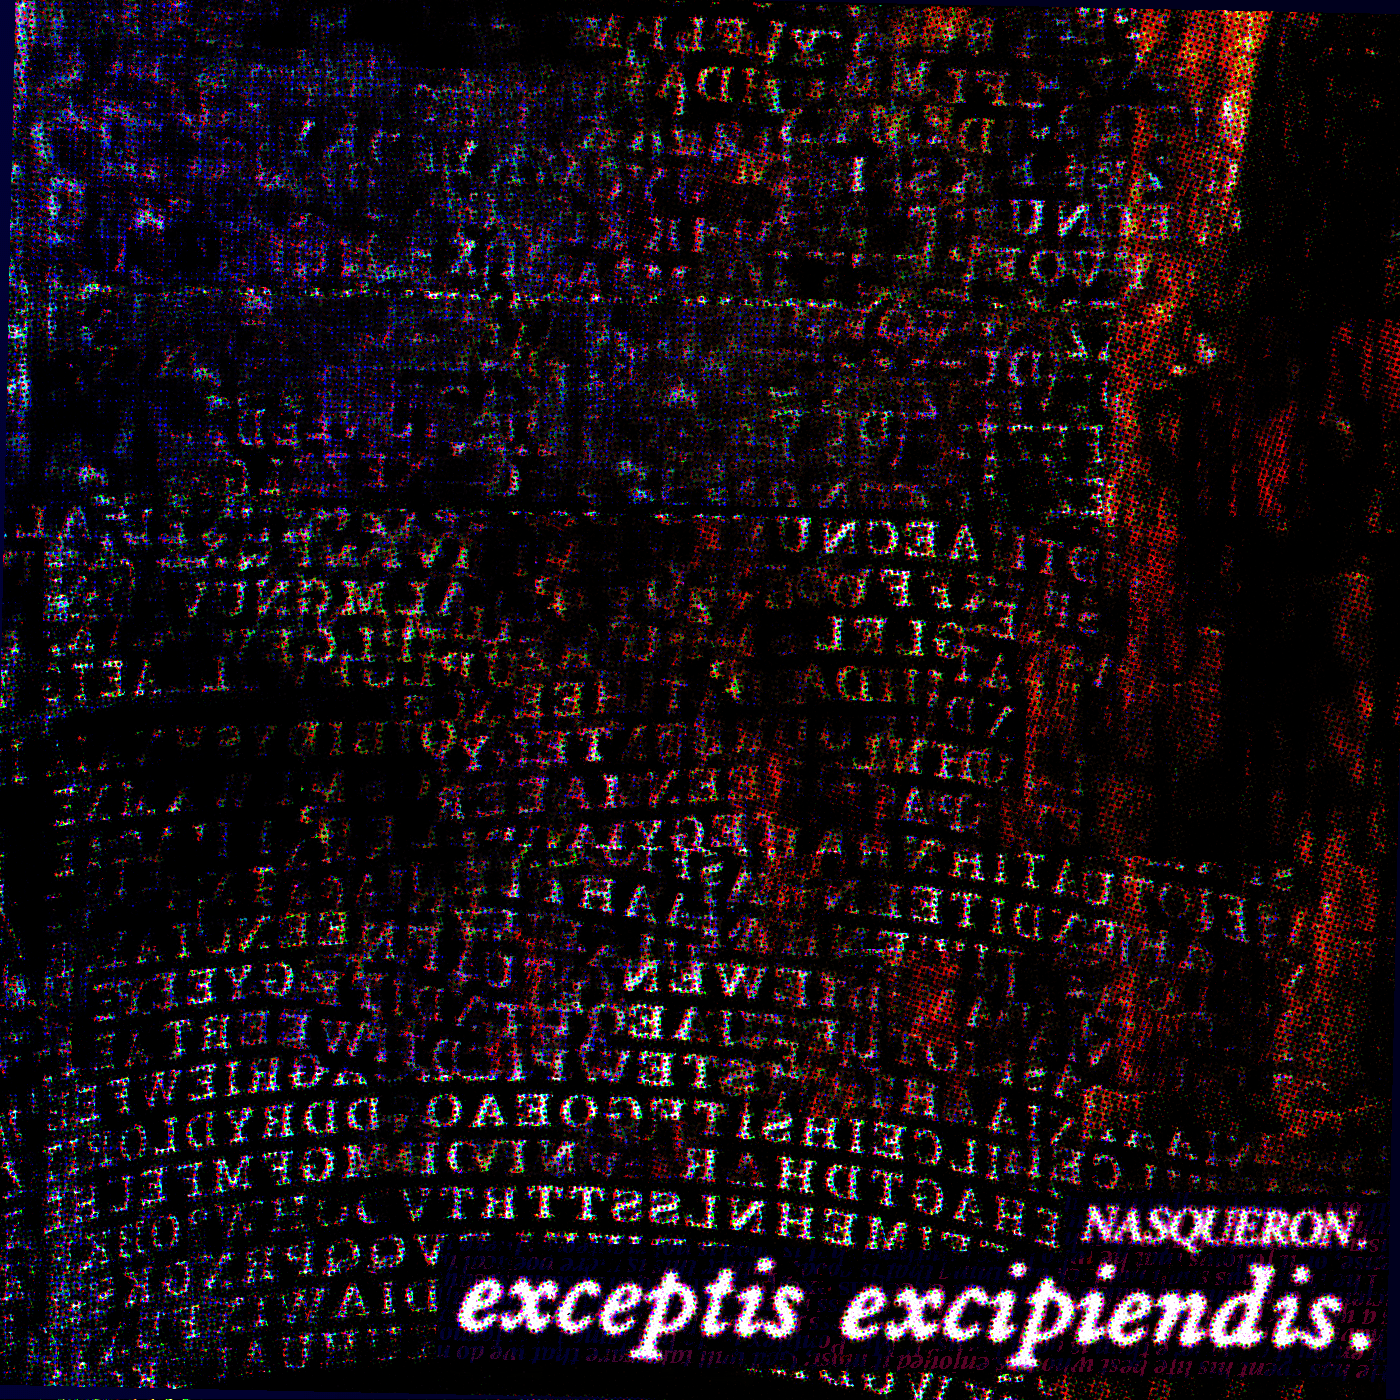 Artwork for <i>Exceptis Excipiendis</i>, an album by Nasqueron